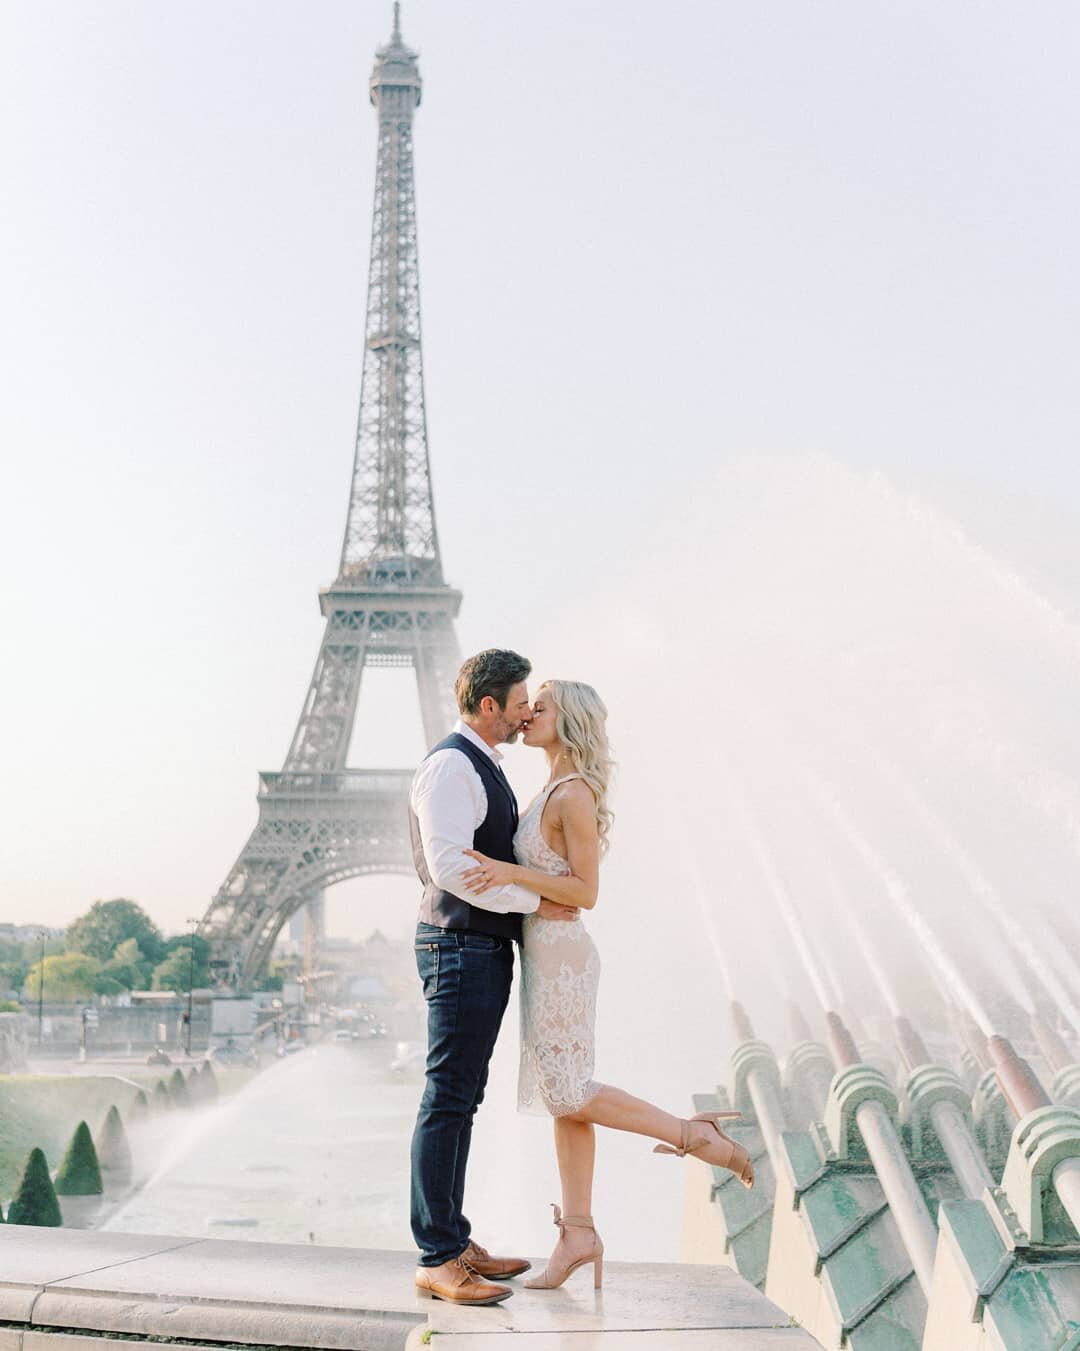 Could it be more Fabulous than this?
.
#timmoore_lovestory
.
.
#parisphotographer #honeymoon #celebrate #loveisall #paris #france #eiffeltower #eiffel #amour #jetaime #photographerinparis #parisphoto #magic #wonderfulplaces #parisjetaime #parisjetado